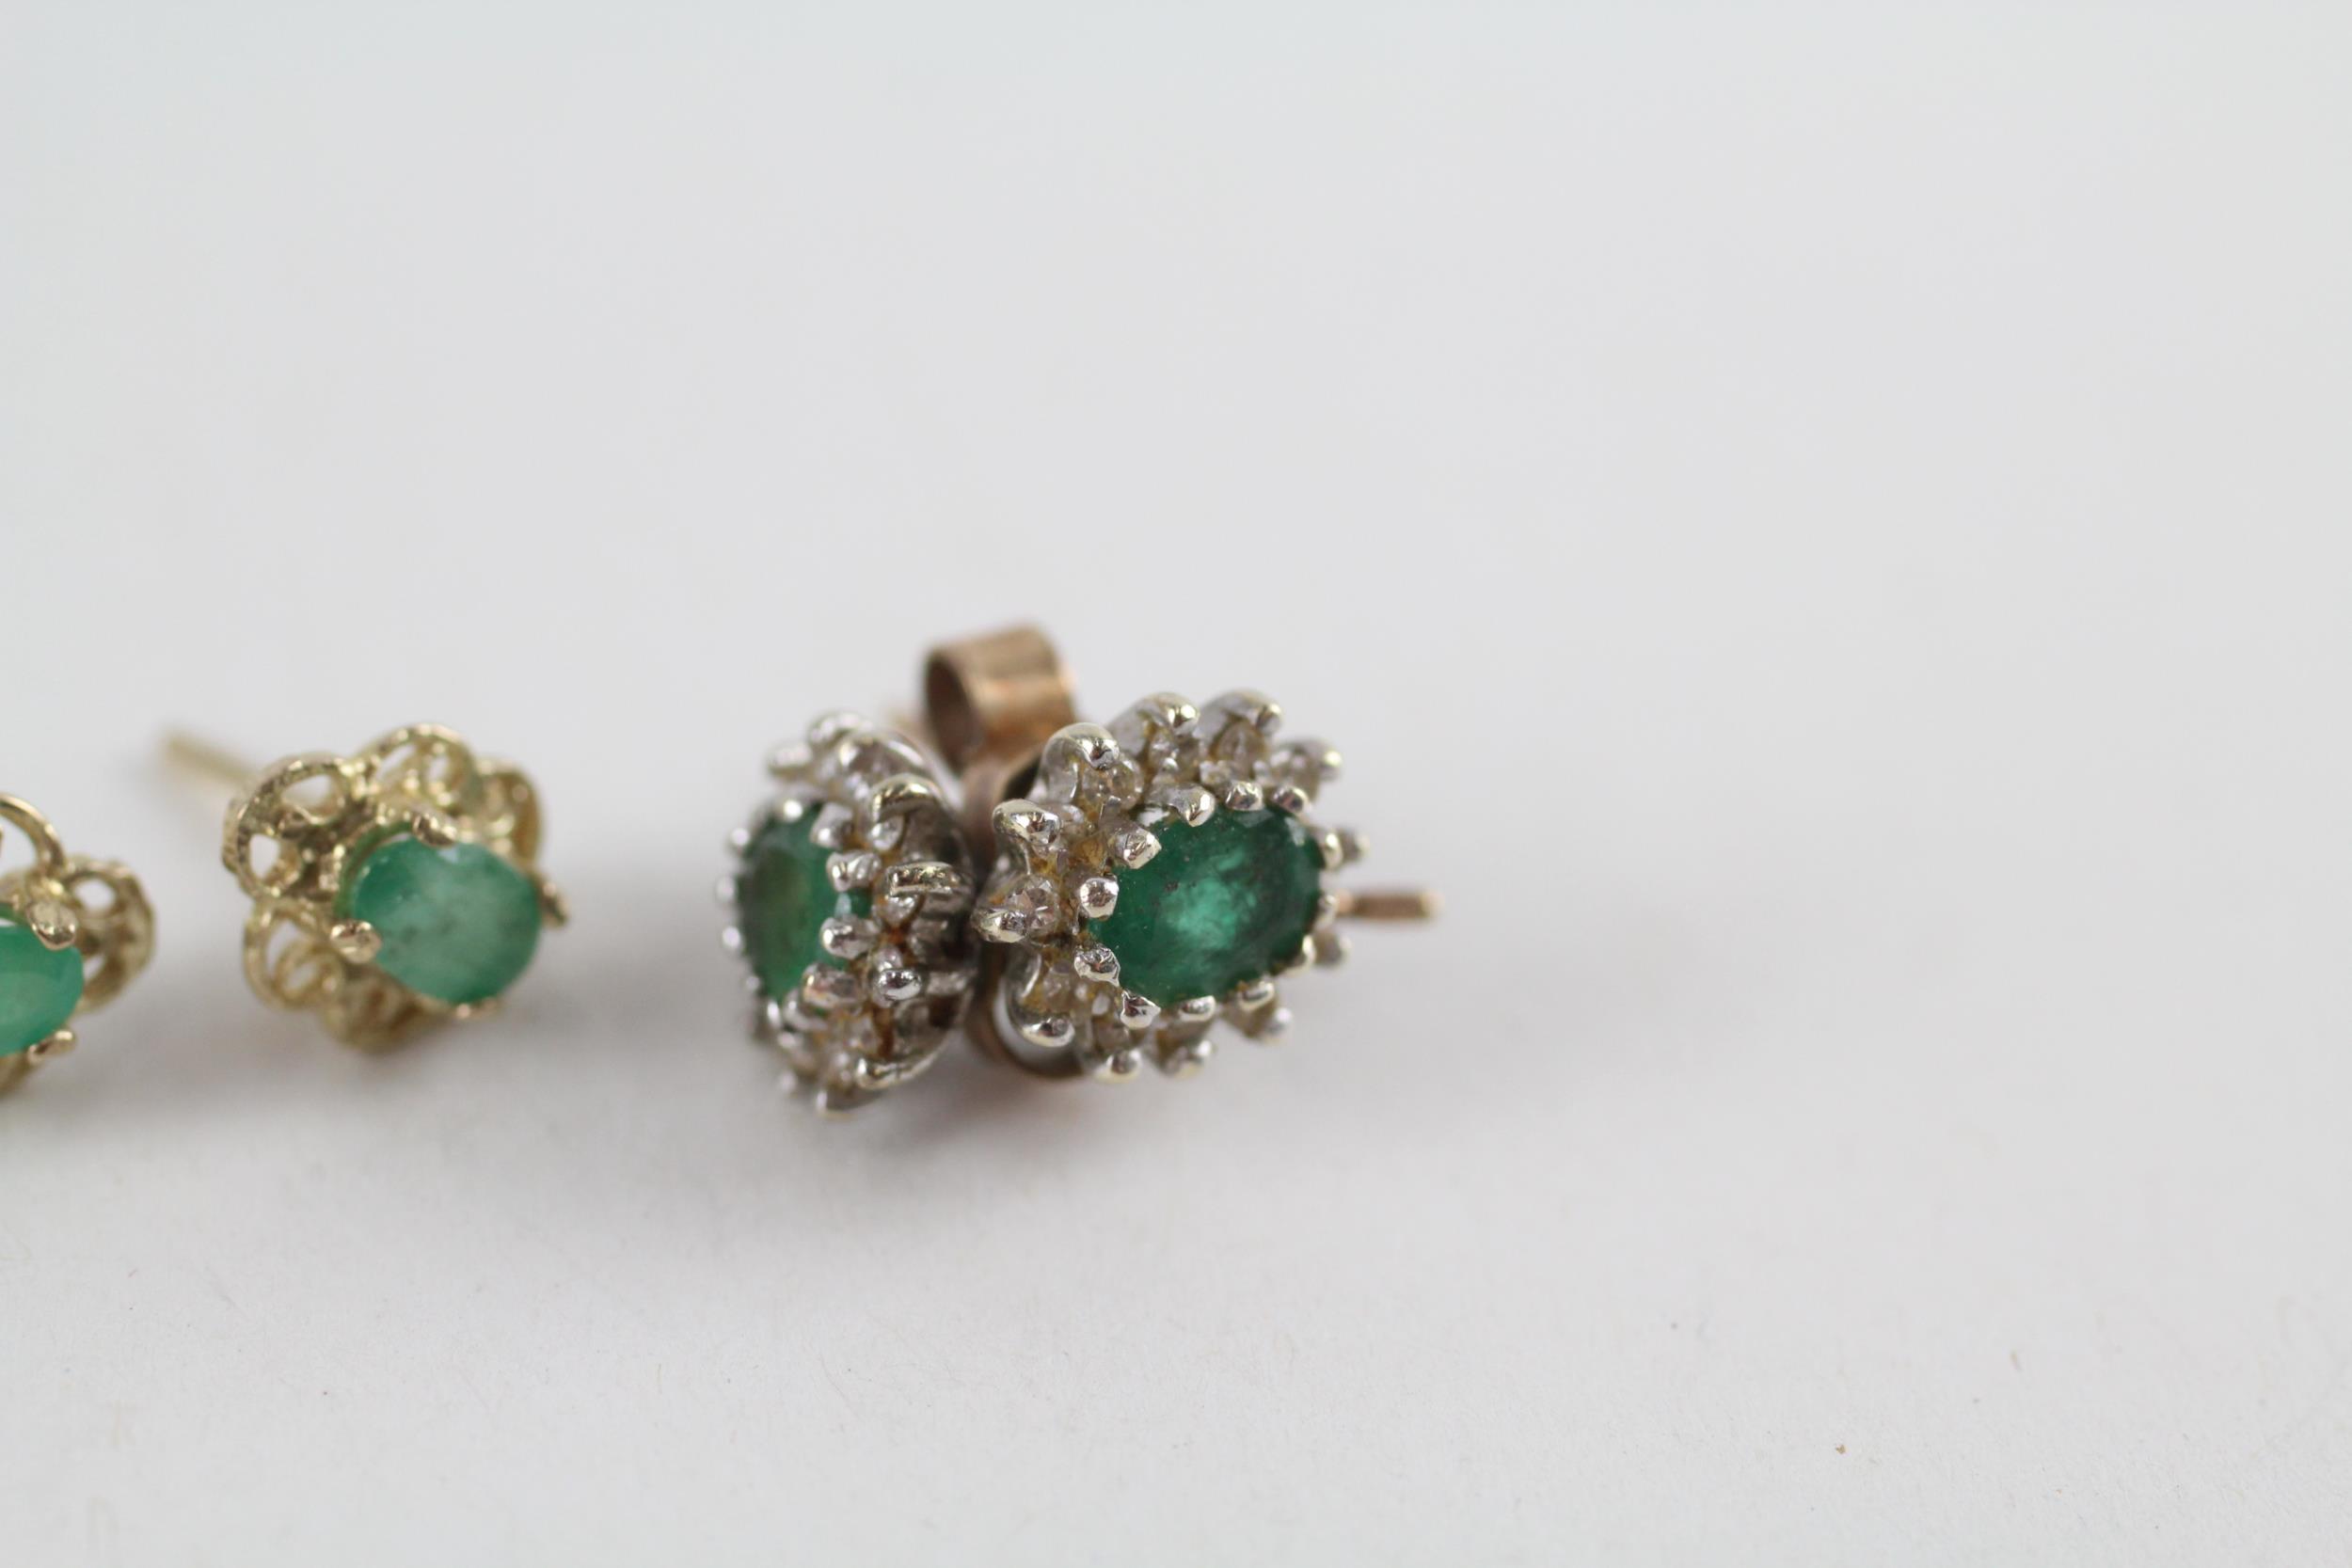 2x 9ct gold emerald & diamond earrings (2.3g) - Image 2 of 4